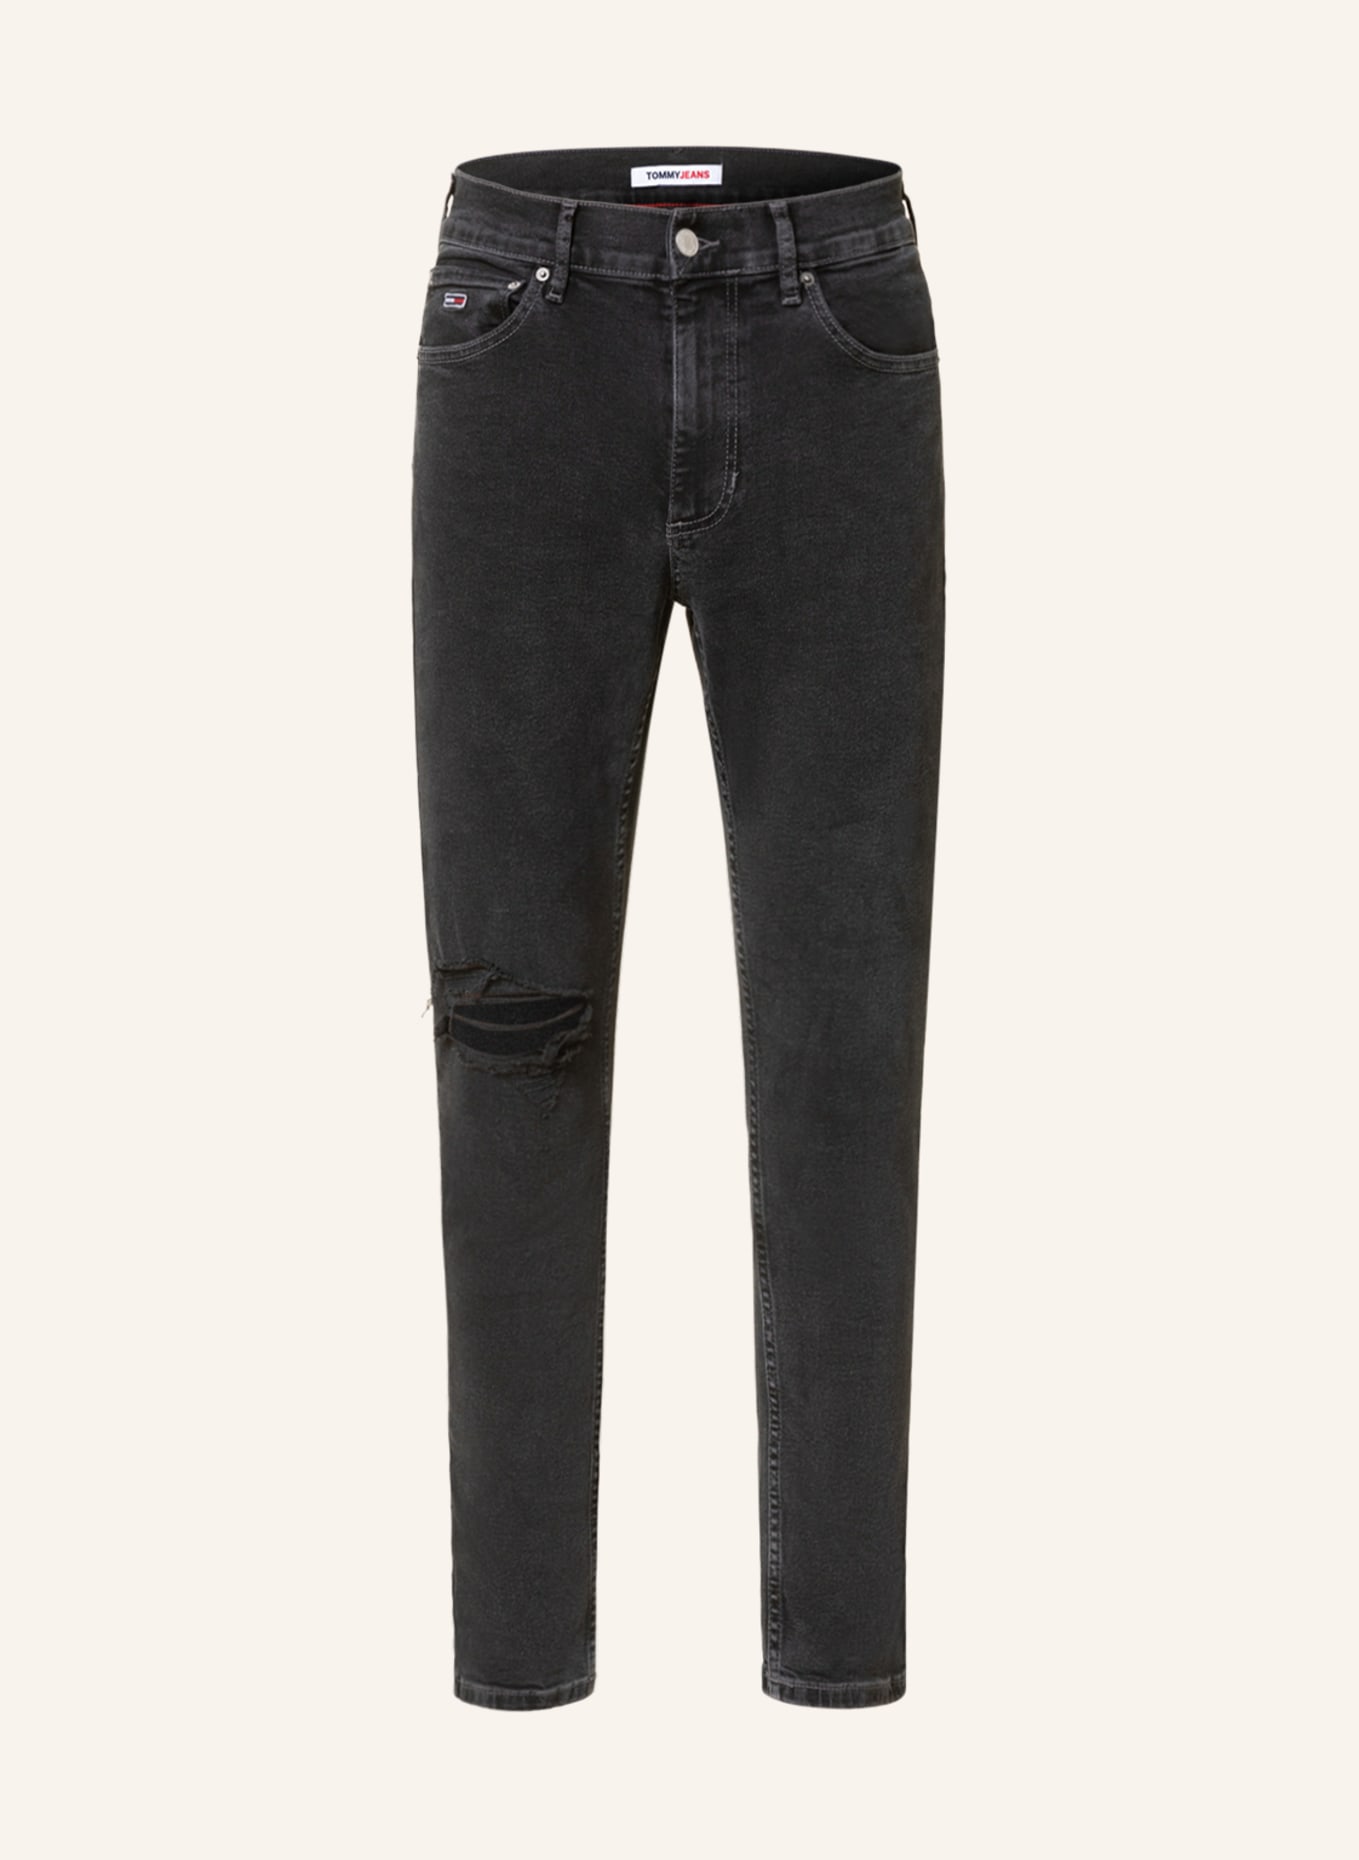 TOMMY JEANS Jeans SCANTON Slim Fit , Farbe: 1BZ Denim Black (Bild 1)